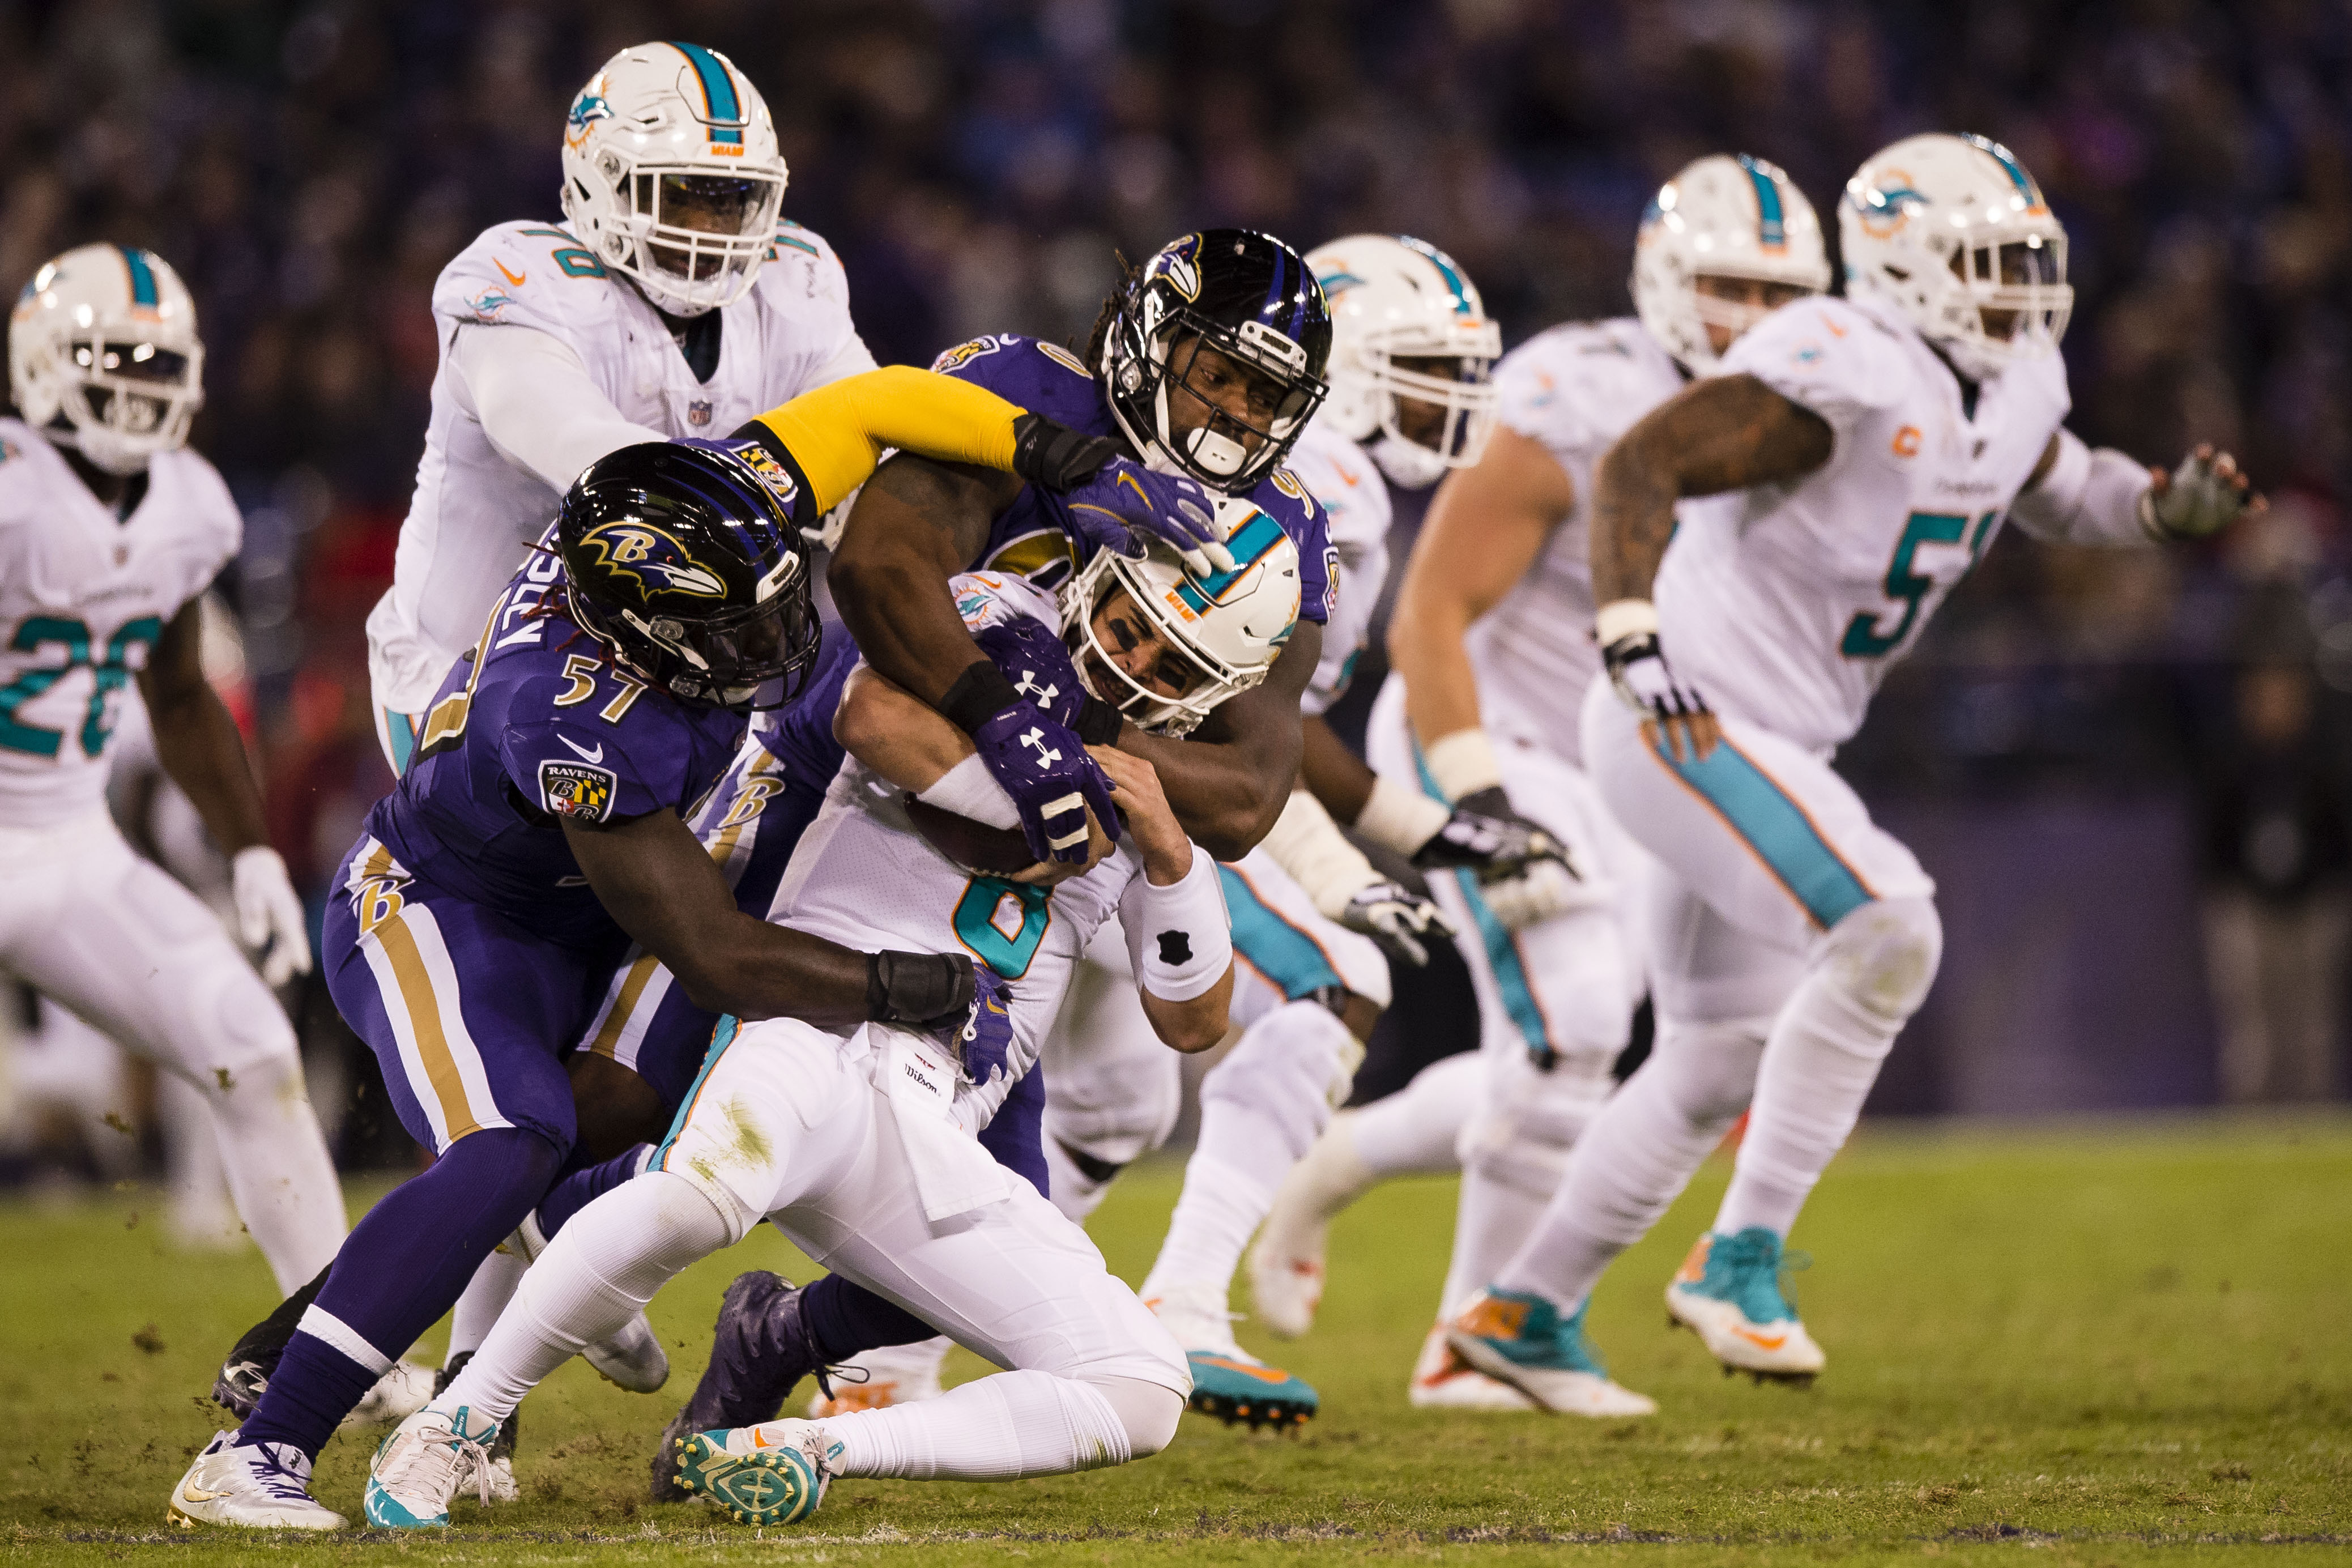 NFL: Miami Dolphins at Baltimore Ravens